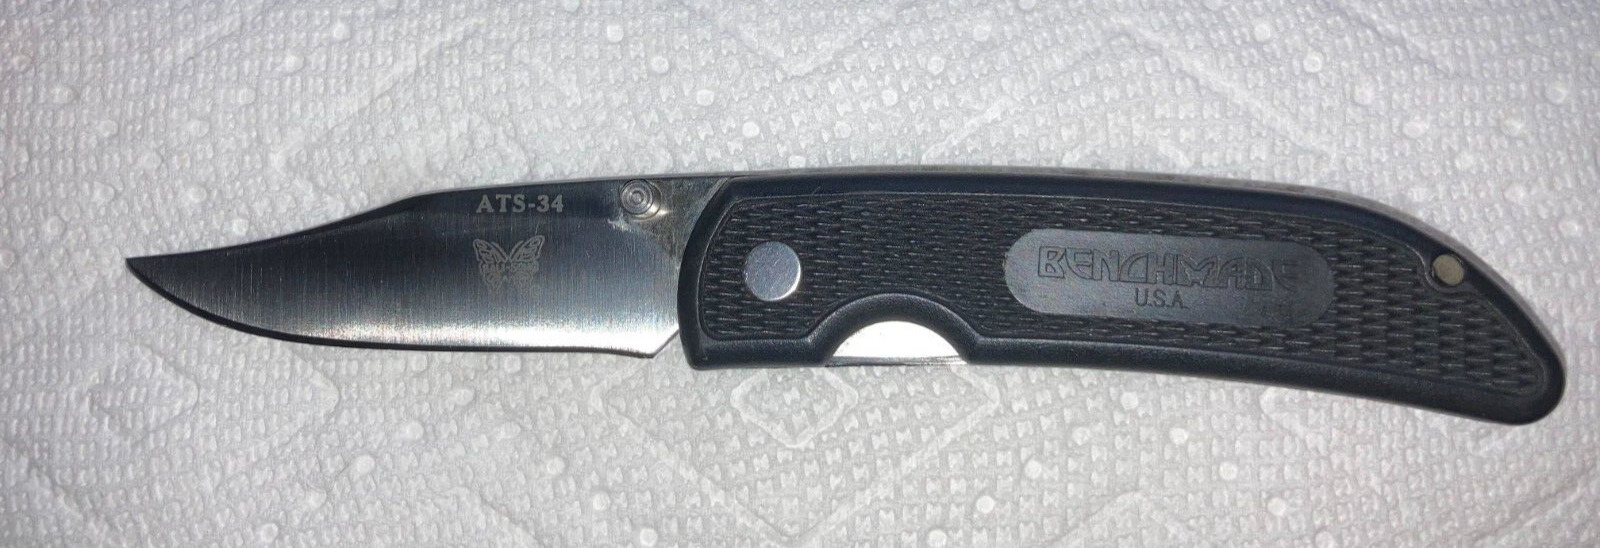 Vintage 90s Benchmade Pocket Knife - ATS-34 400 Series